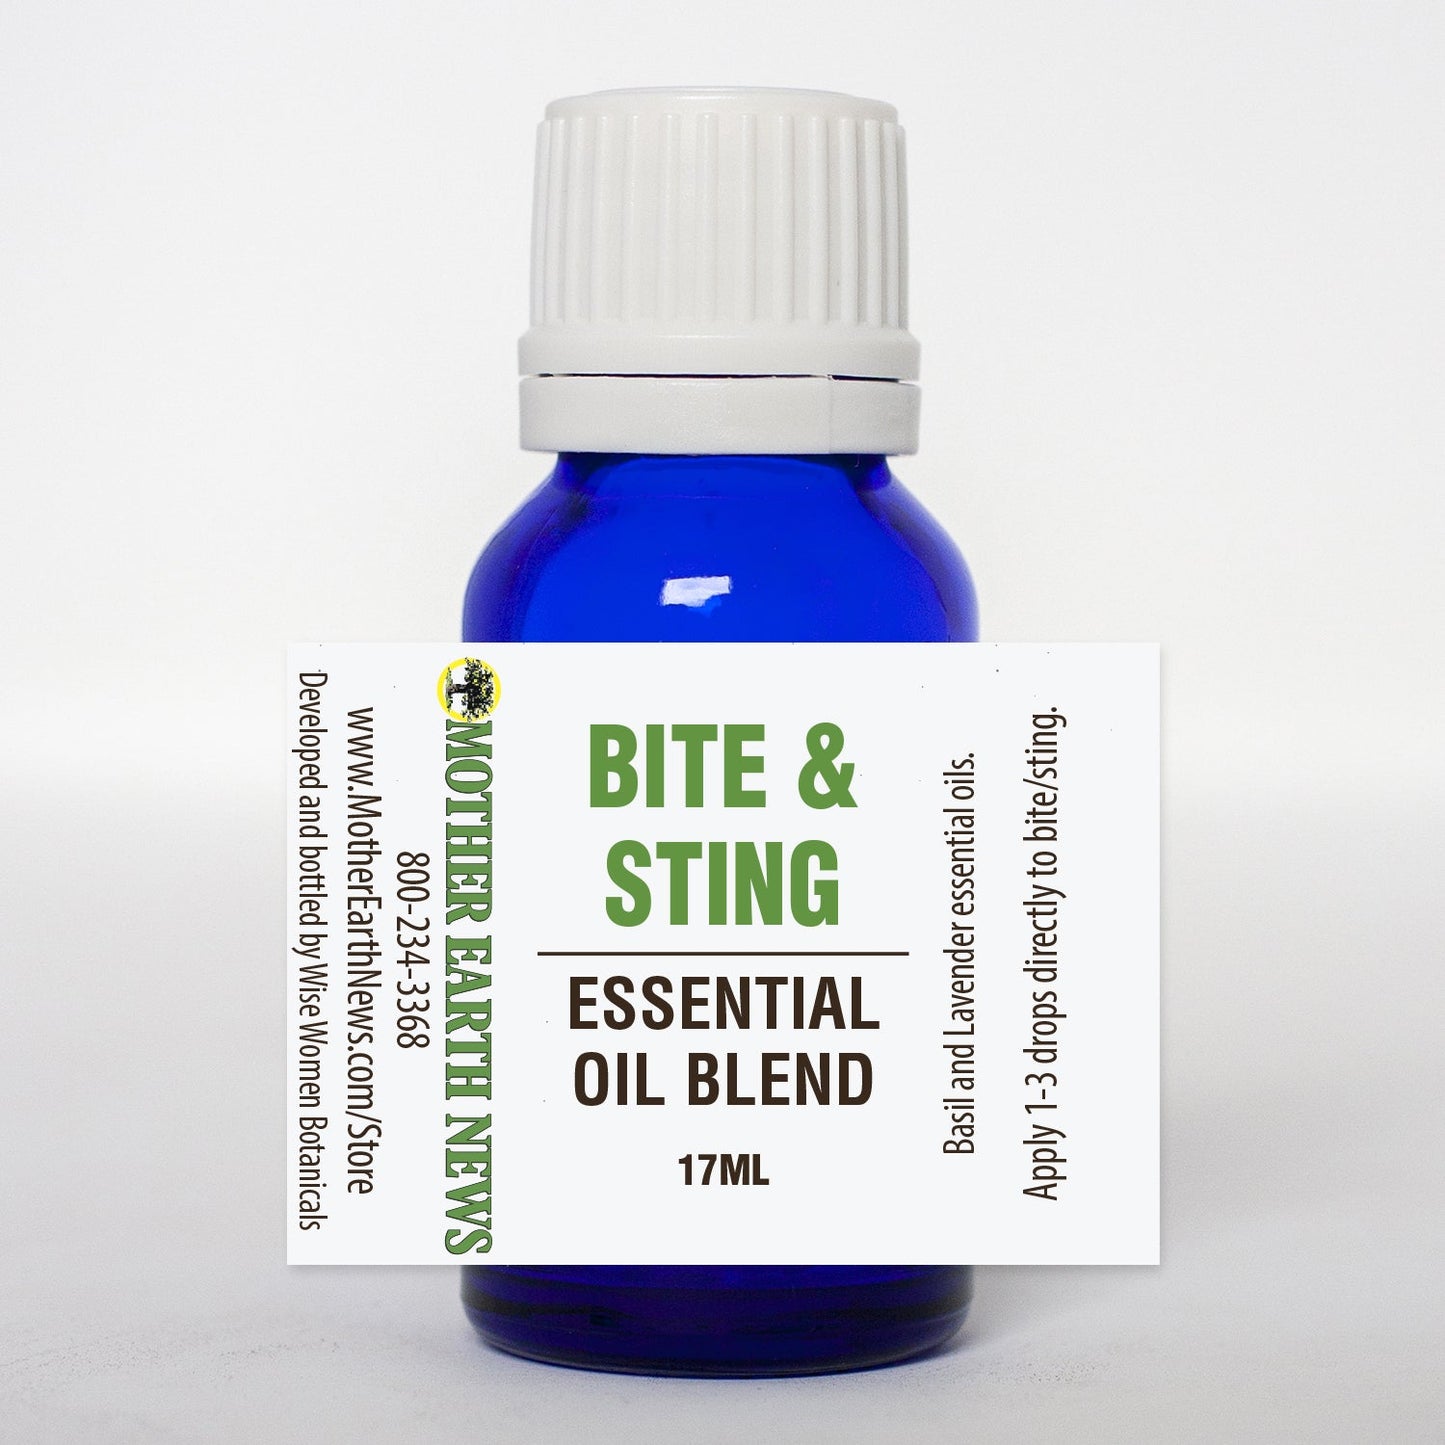 BITE & STING ESSENTIAL OIL BLEND